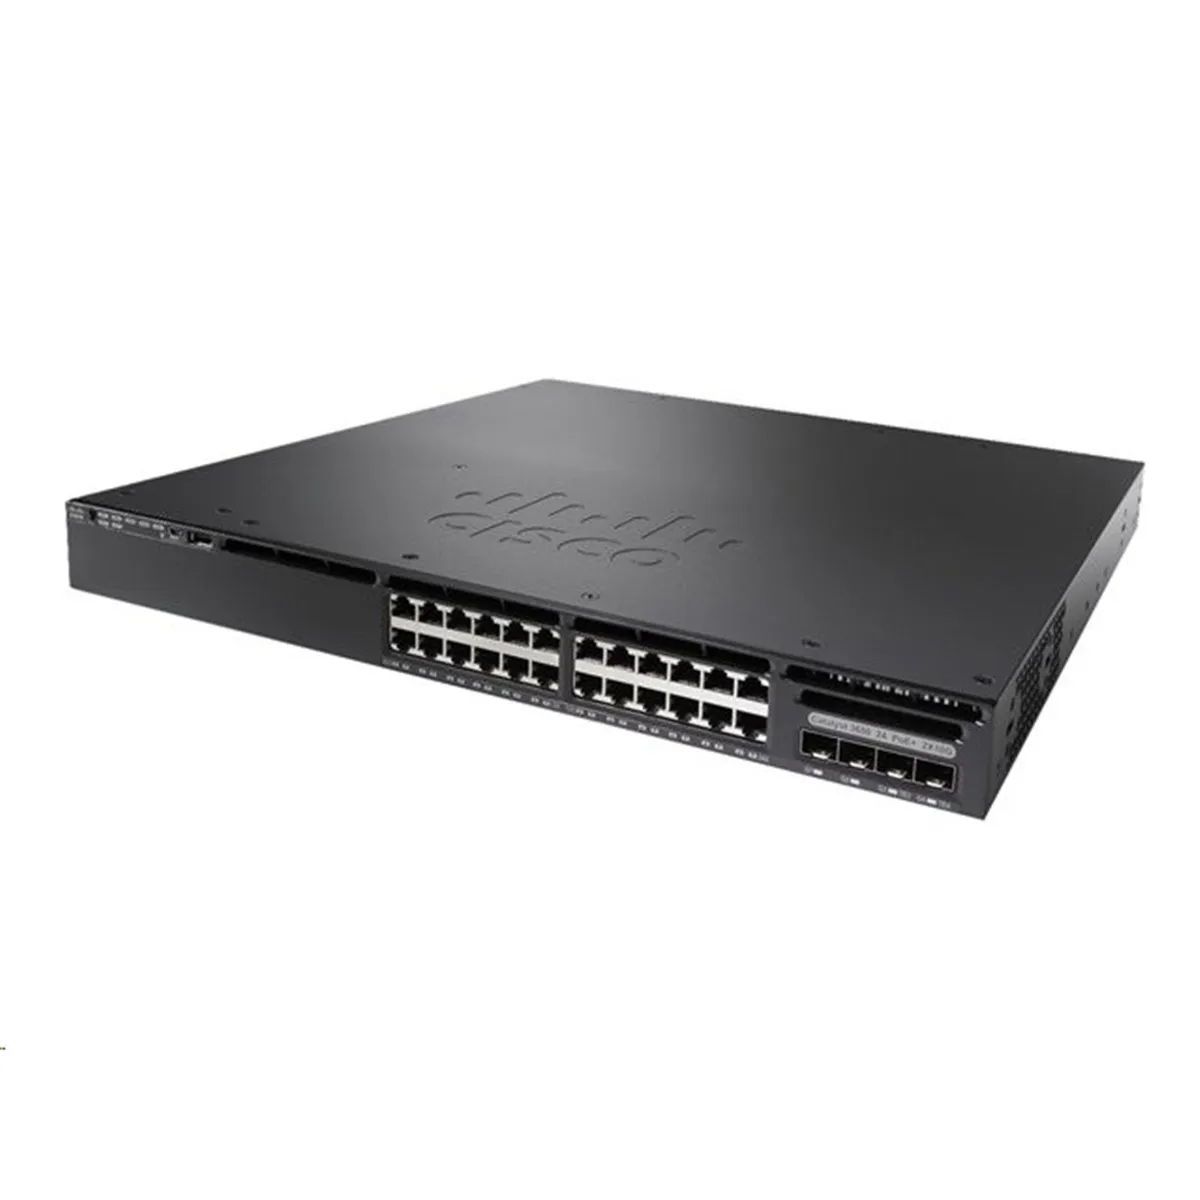 Cisco Catalyst 3650 WS-C3650-24PS 24xRJ-45 1Gbps PoE Switch (No Ears)